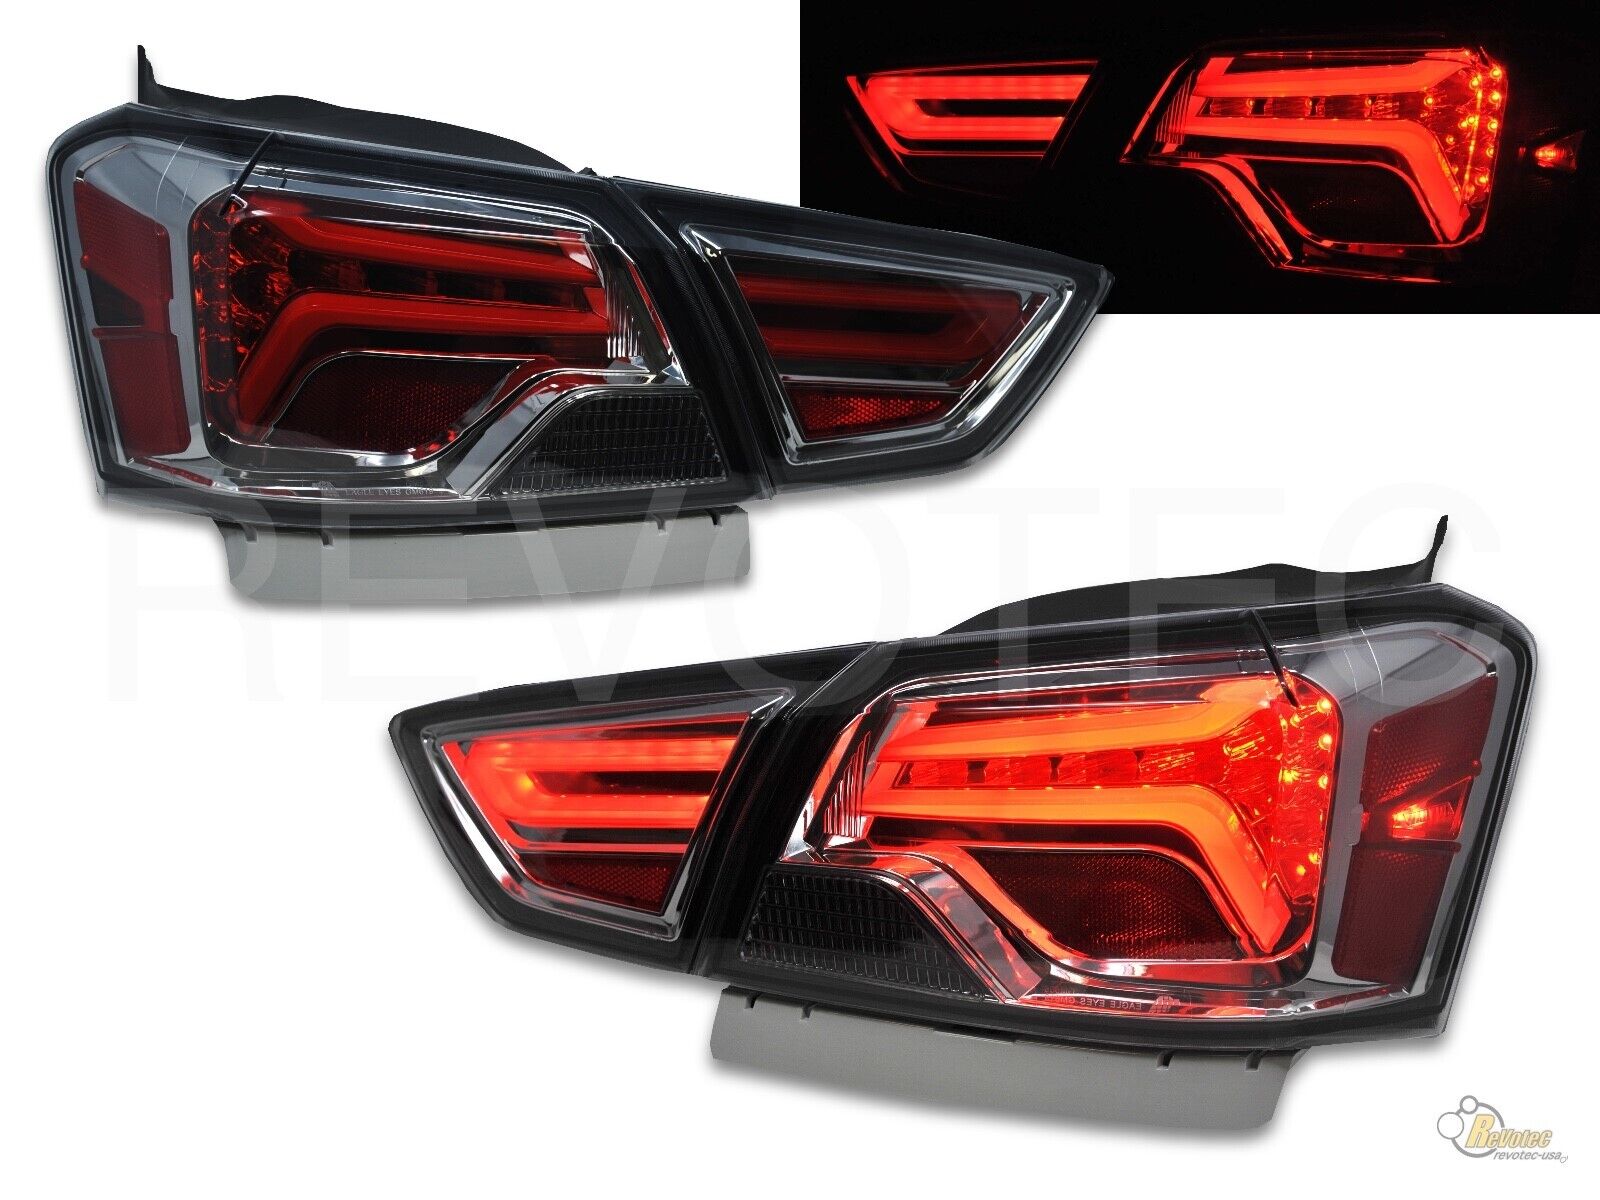 2014-2019 Chevy Impala Sedan Smoke LED Tail Lights RH + LH